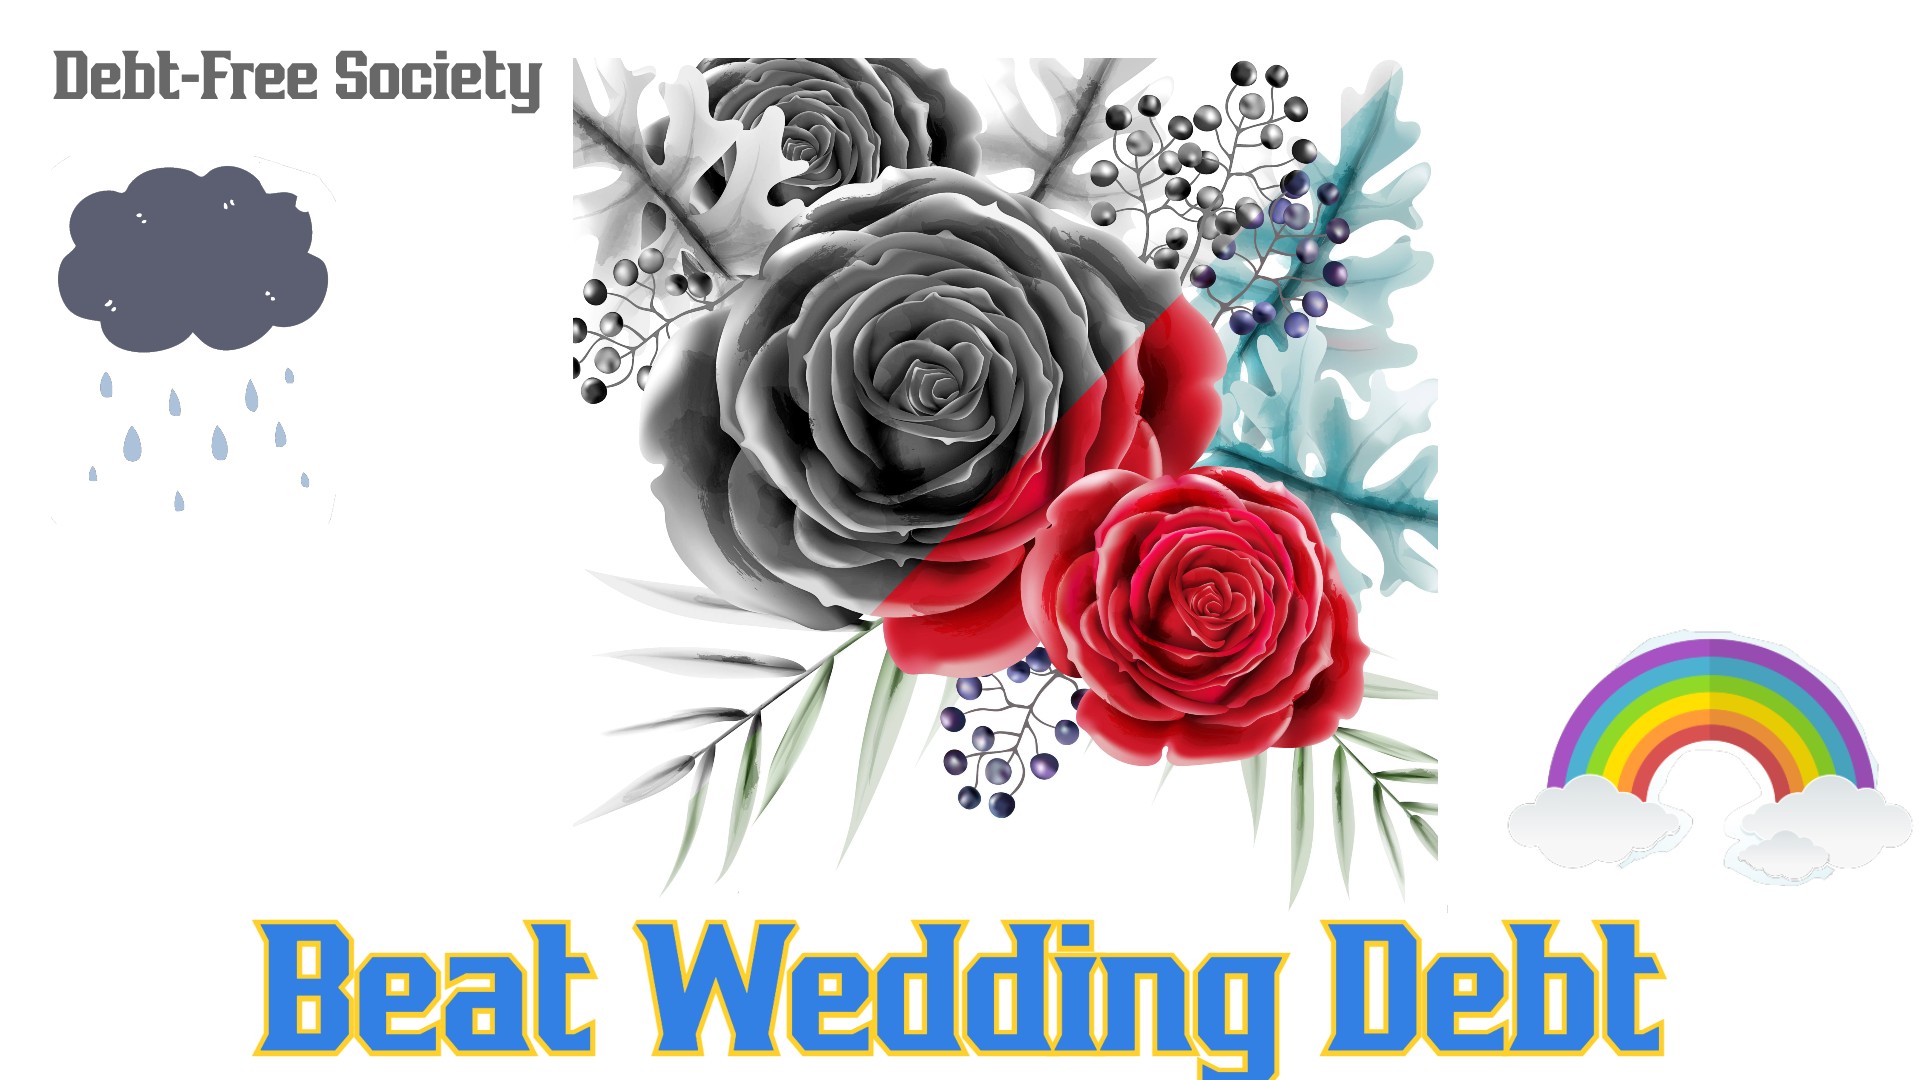 Debt-Free Society: Beat Wedding Debt